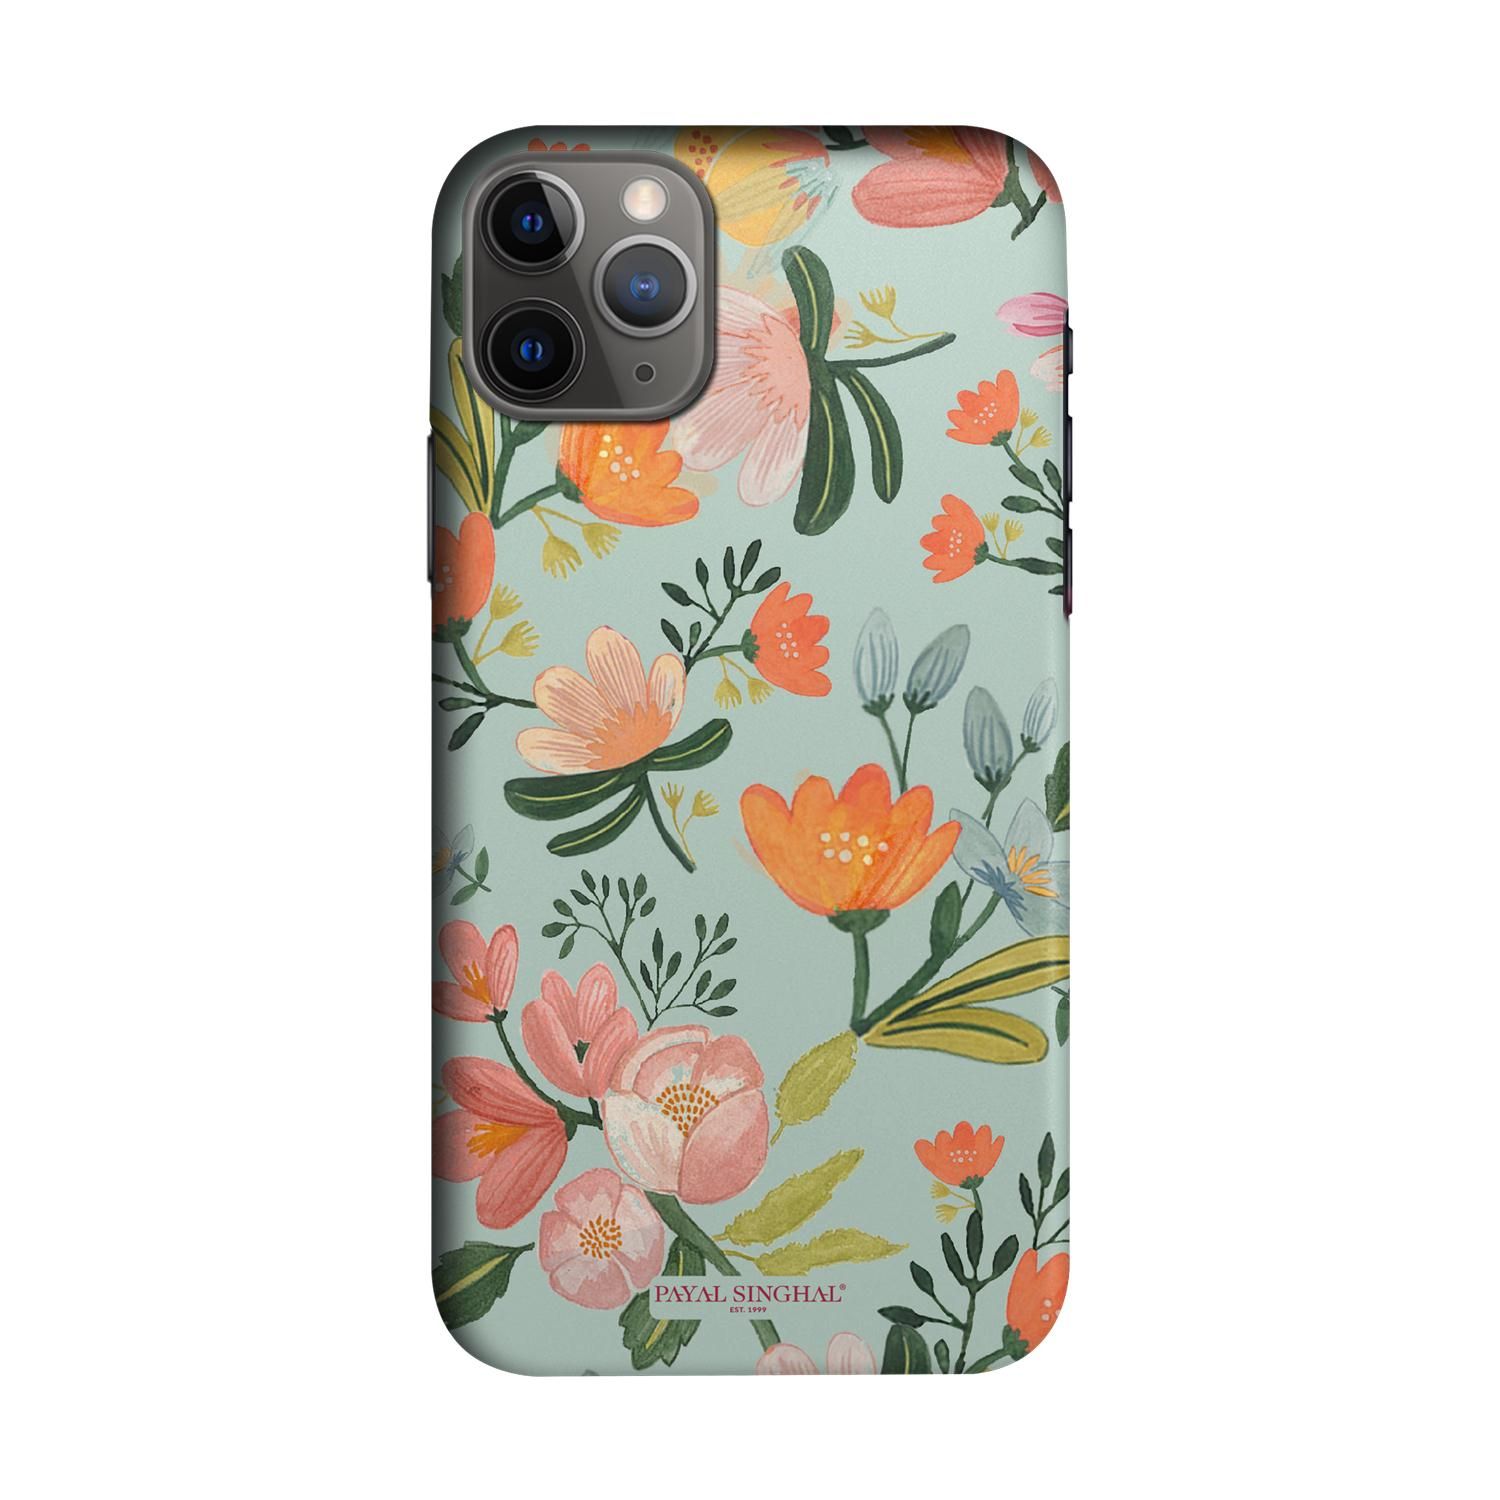 Buy Payal Singhal Aqua Handpainted Flower - Sleek Phone Case for iPhone 11 Pro Max Online